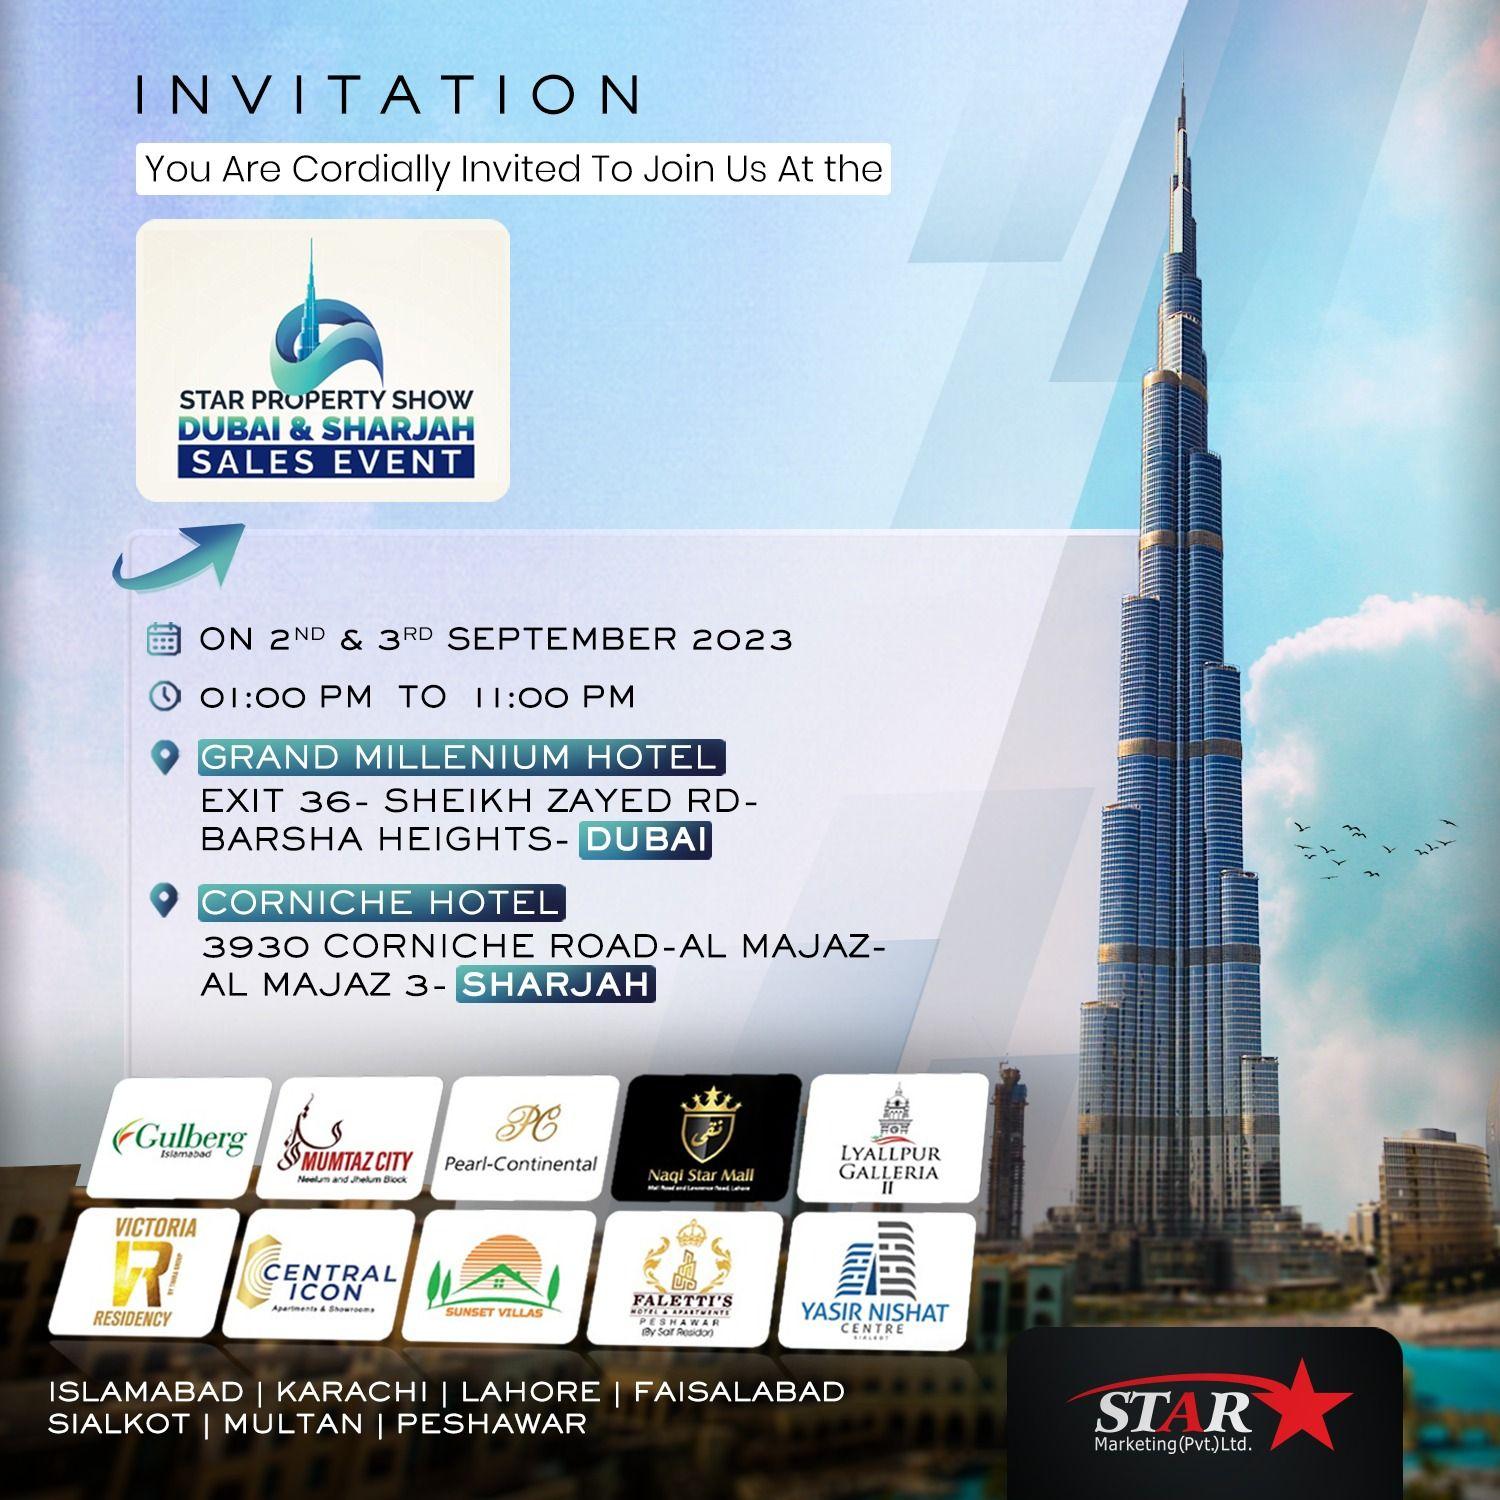 STAR PROPERTY SHOW DUBAI & SHARJAH SALES EVENT